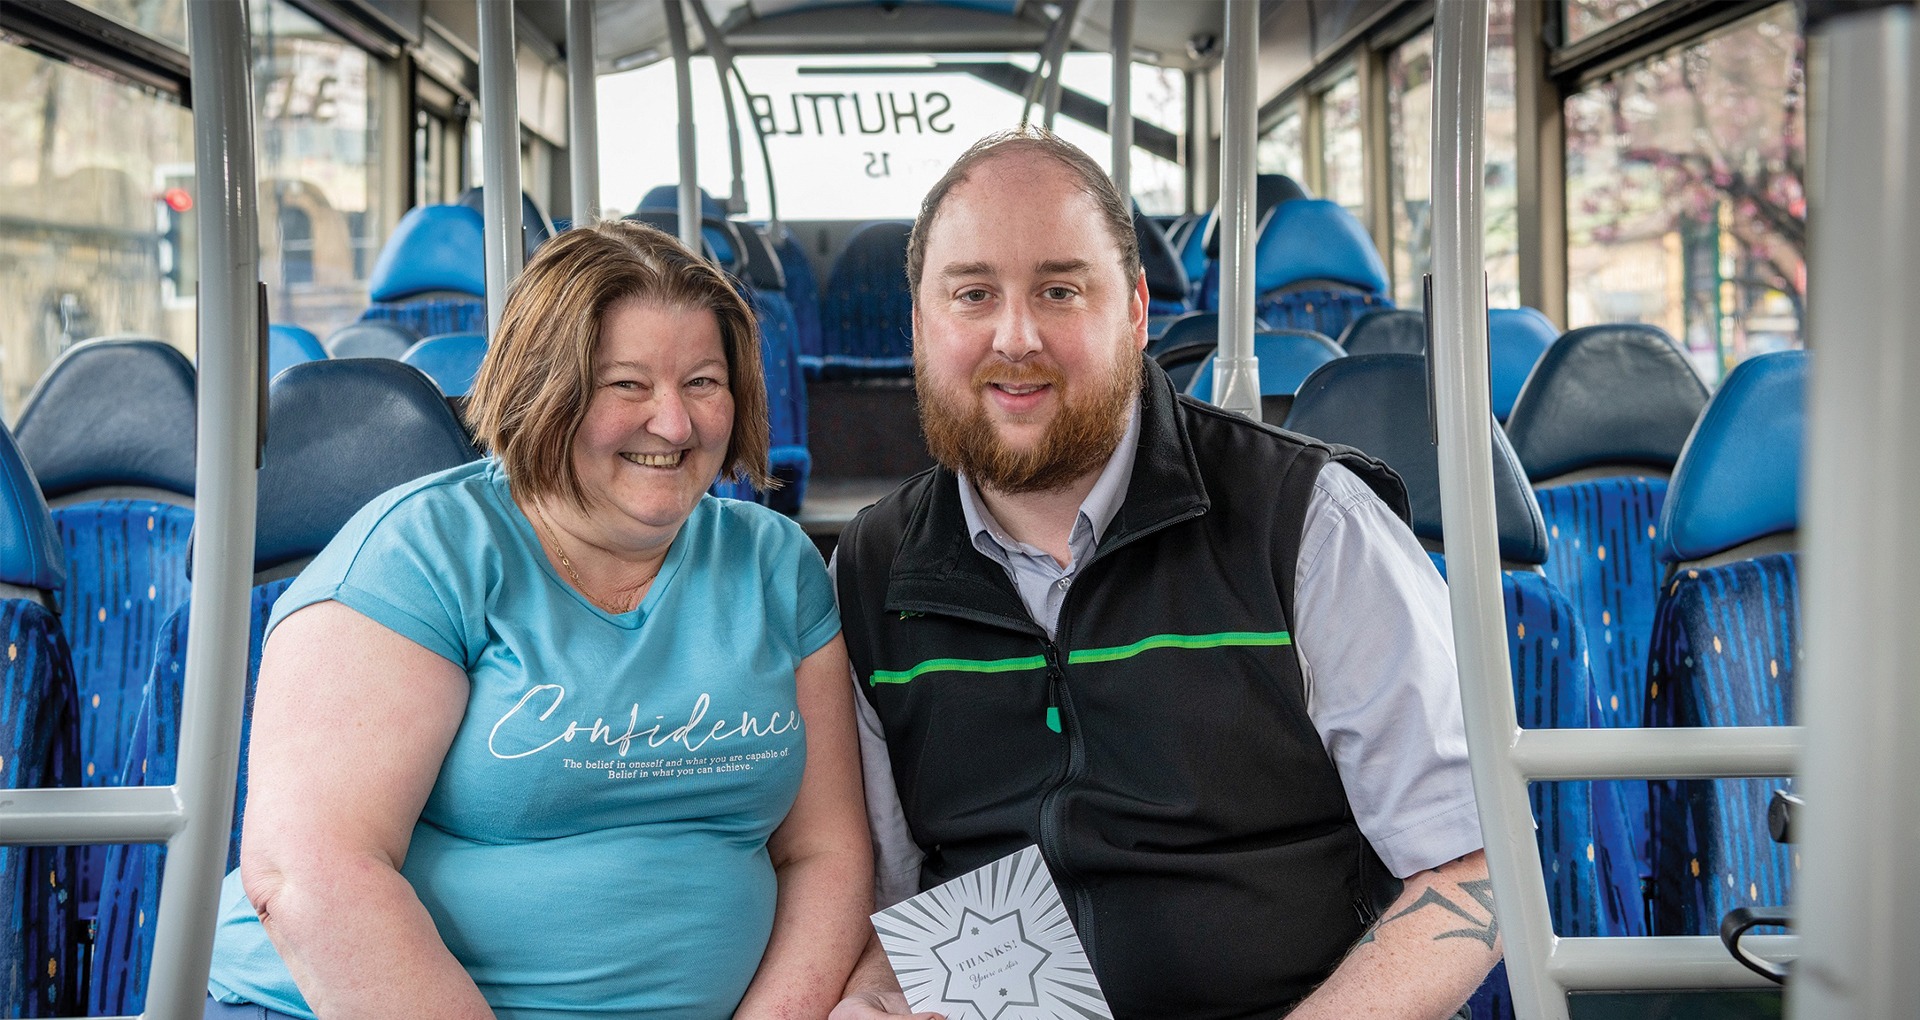 shuttle customer praises driver after Bradford bus drama